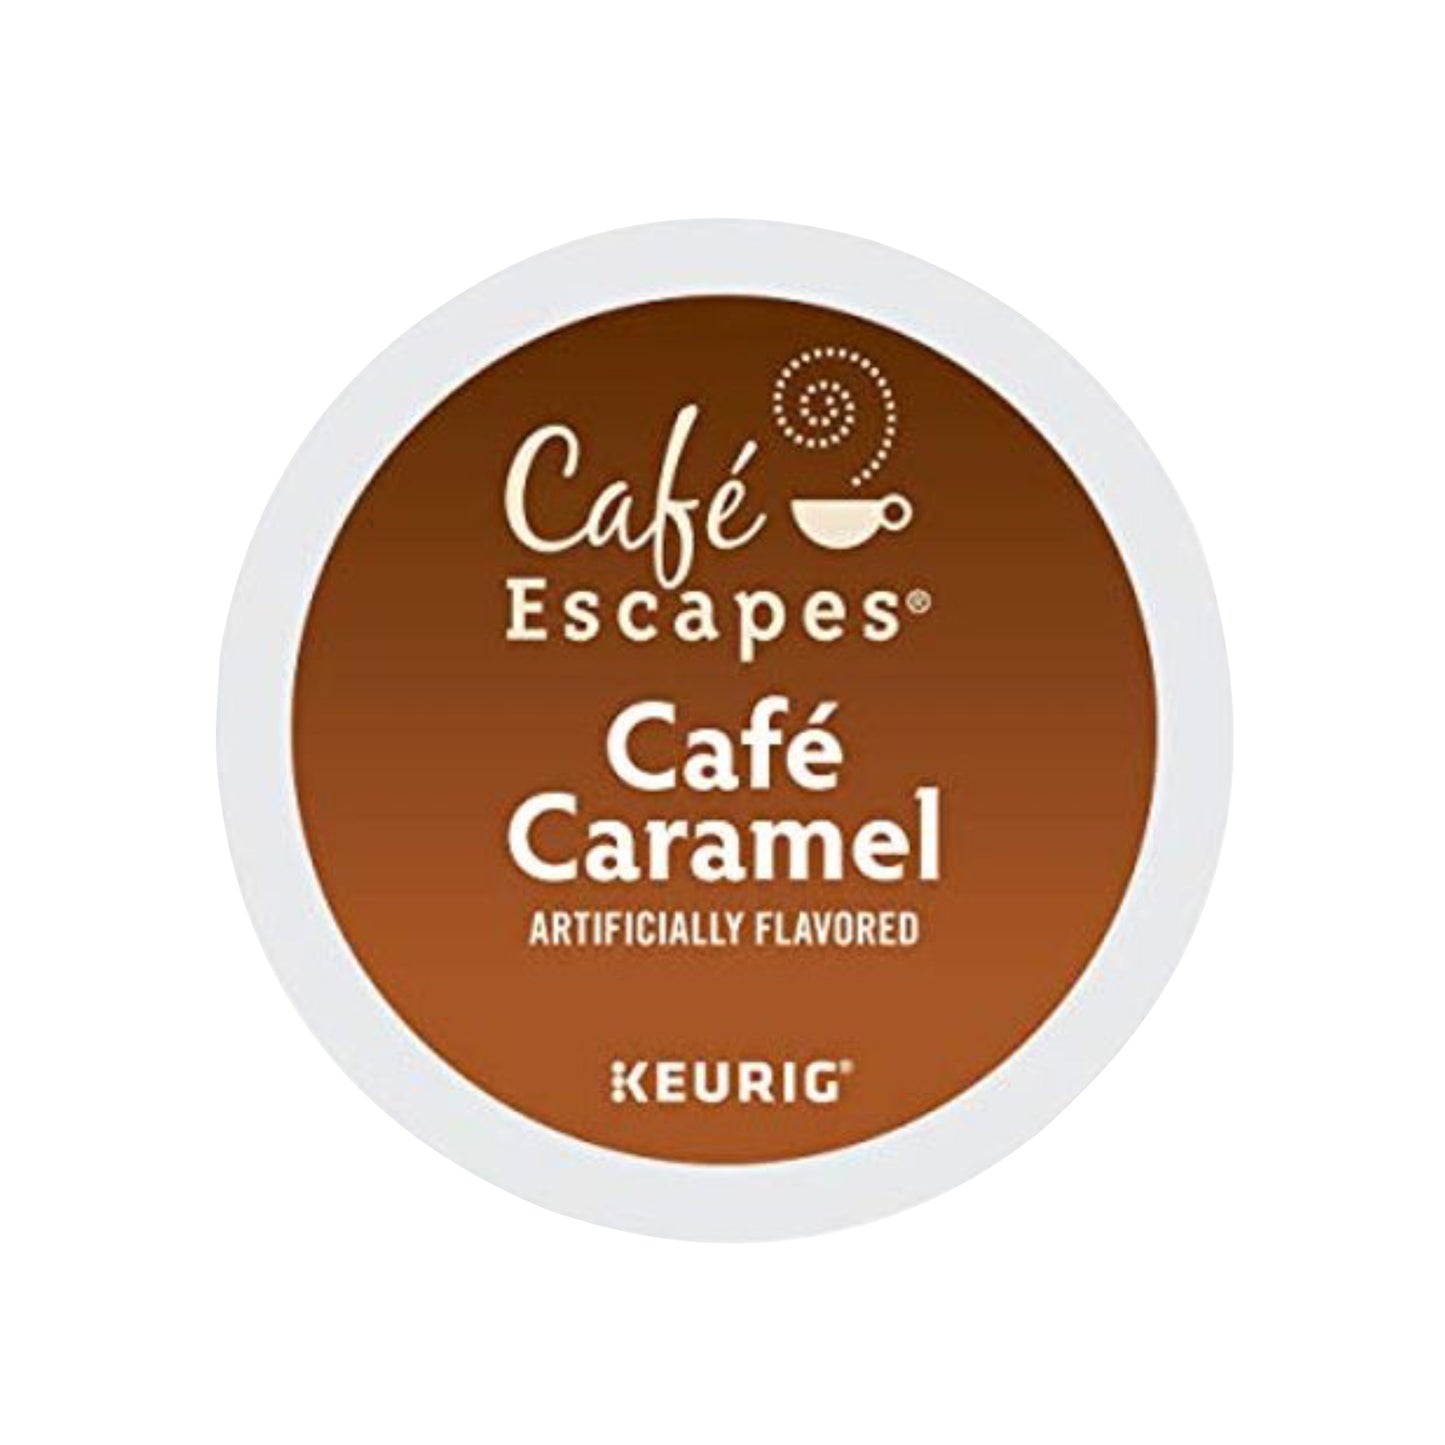 Cafe Escapes Cafe Caramel Single-Serve Coffee Pods